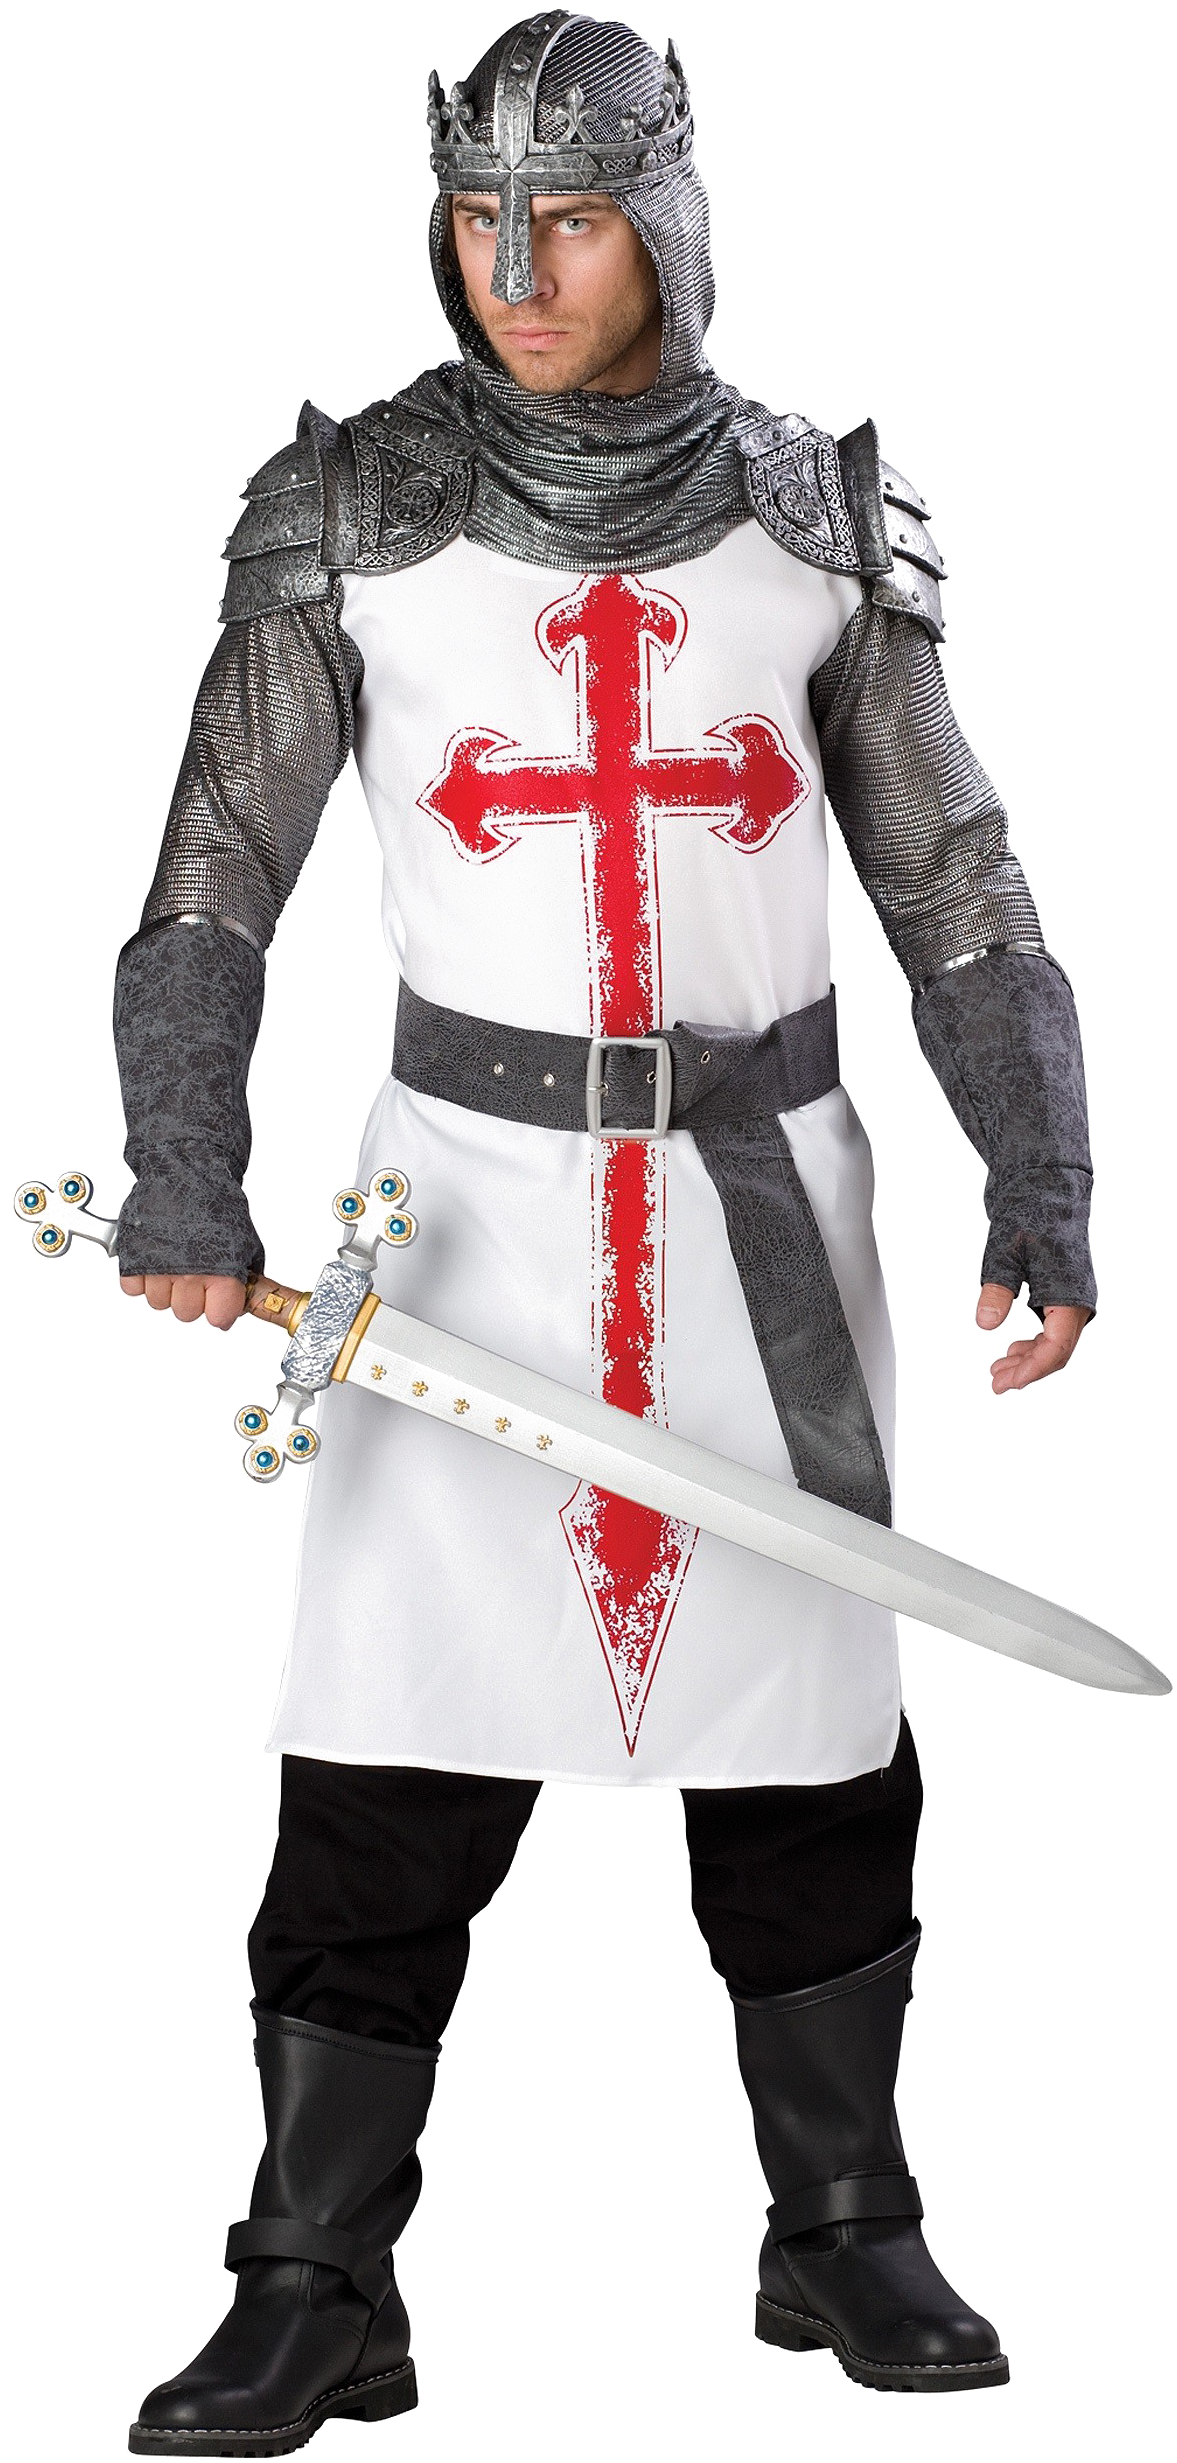 A Man In A Garment Holding A Sword